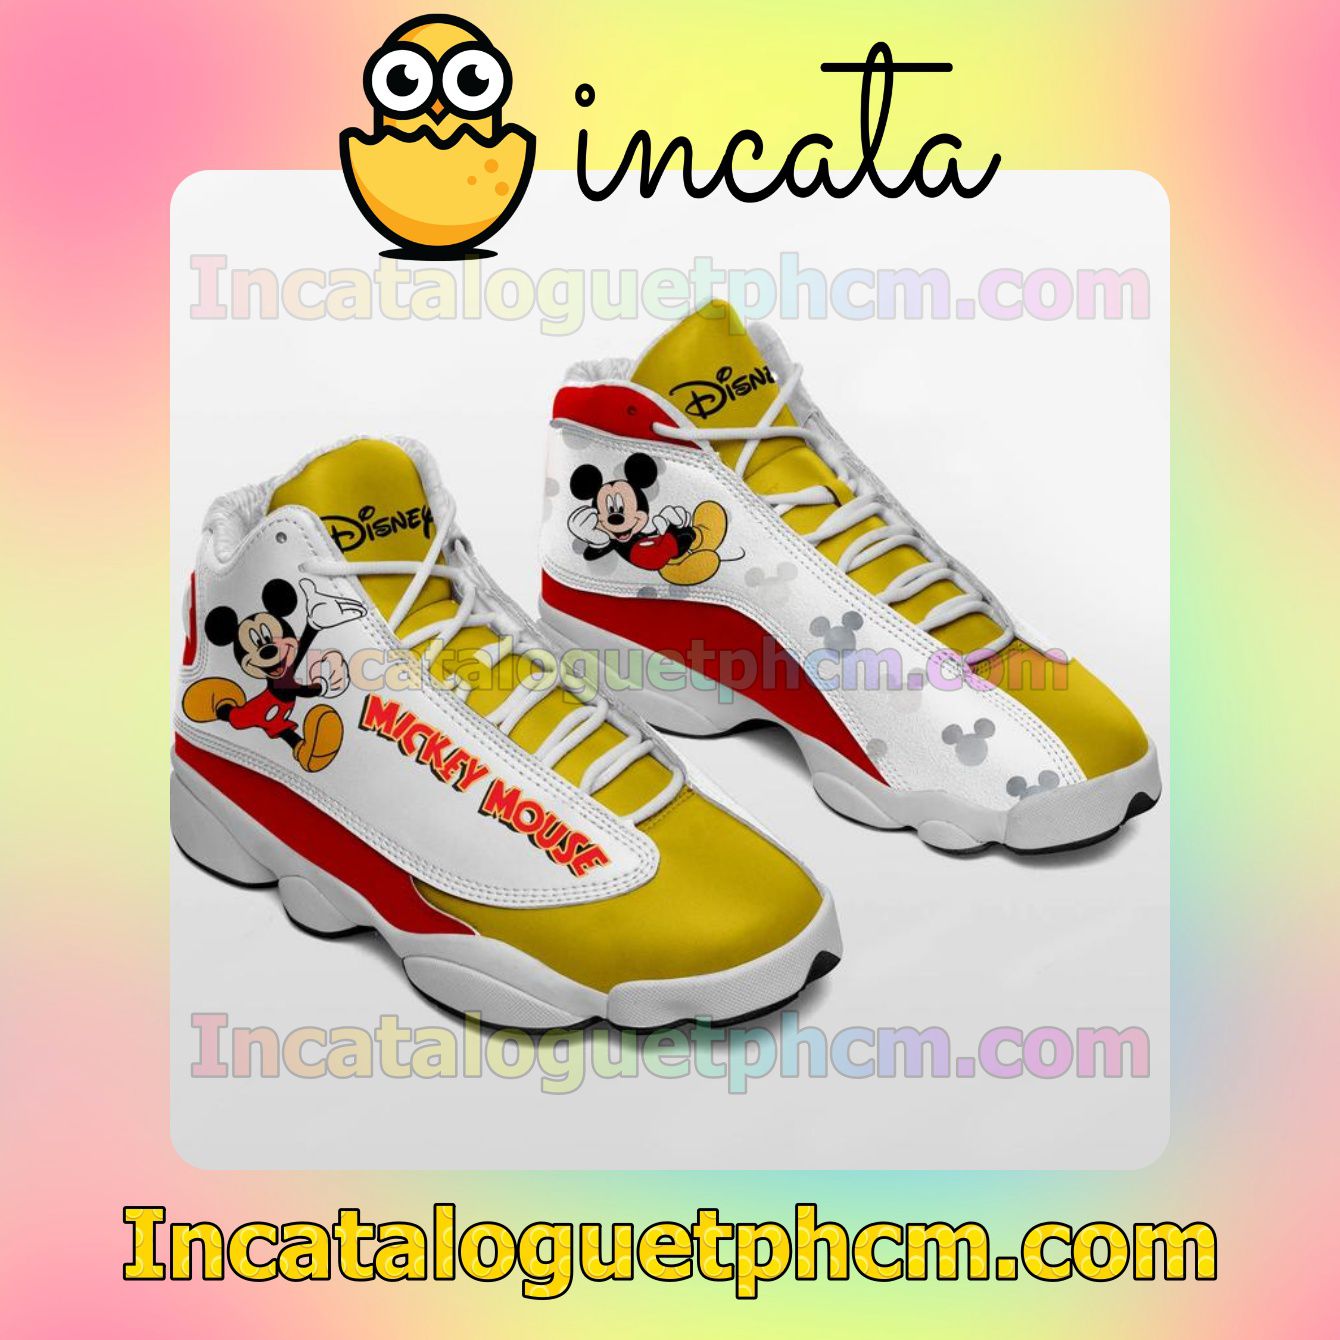 Disney Mickey Mouse White Yellow Jordans